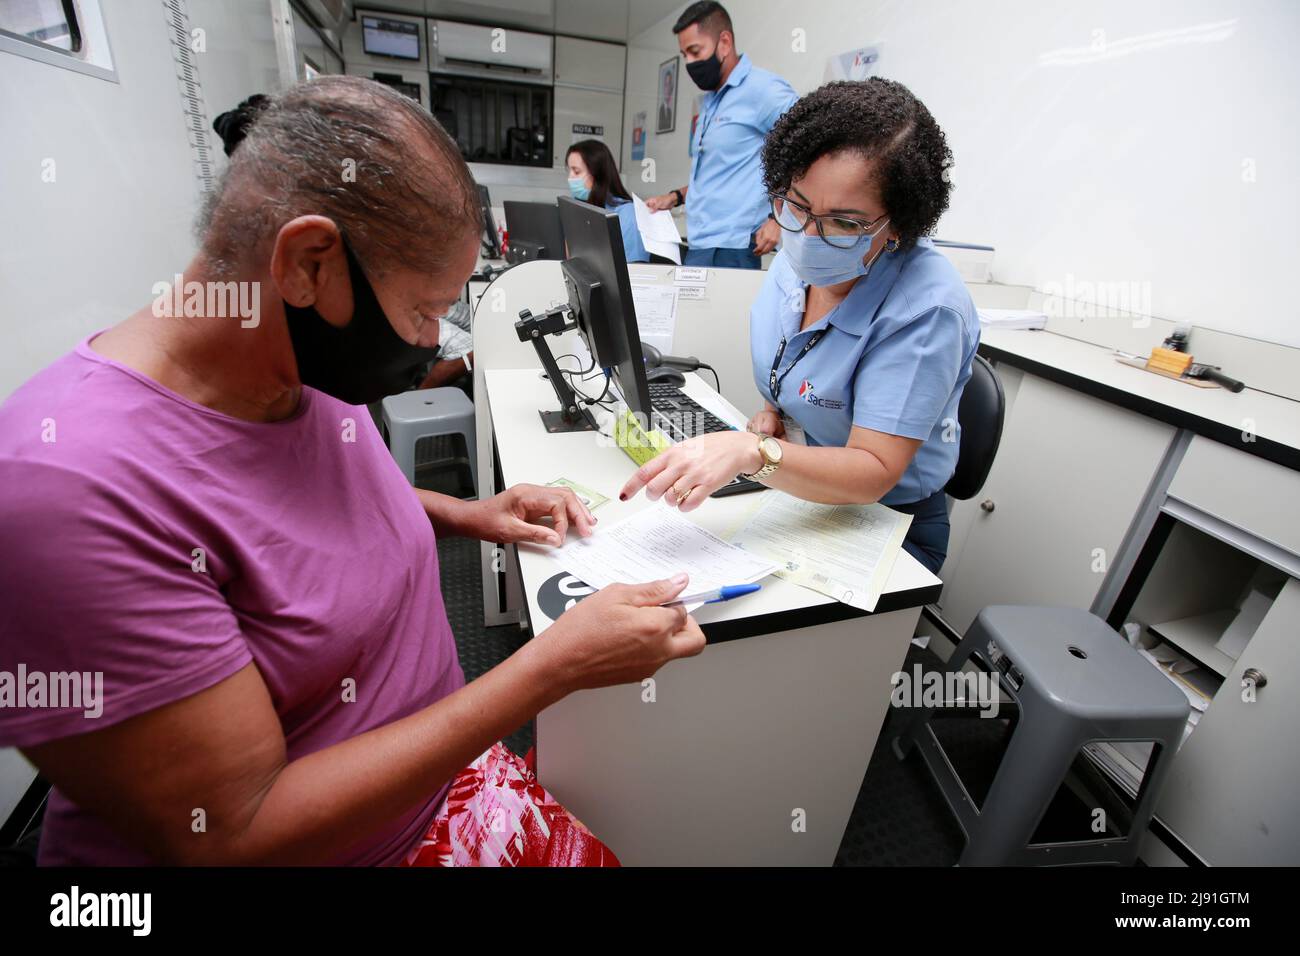 ibotirama, bahia, brazil - may 18, 2022: making identity cards for people during a public health program in the city of Ibotirama. Stock Photo